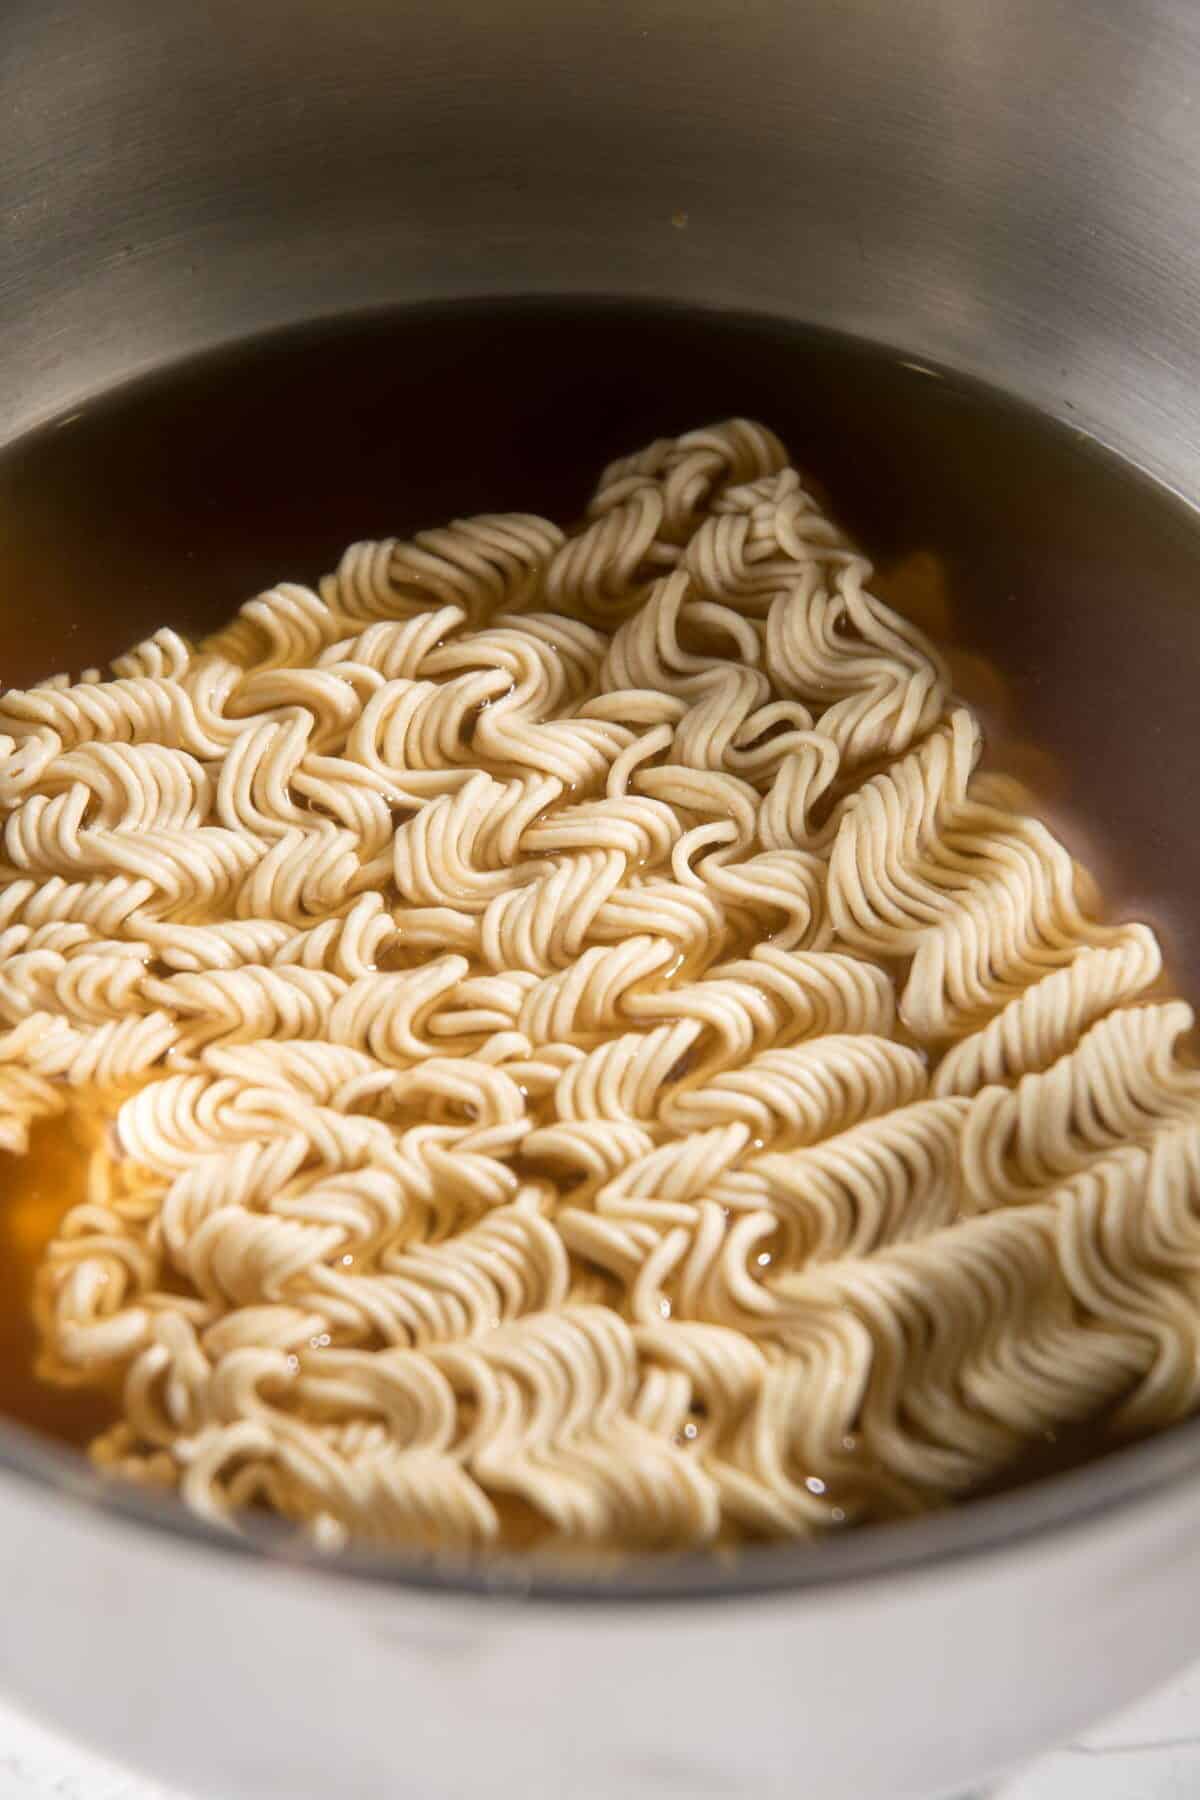 Instant ramen noodles in a pot.